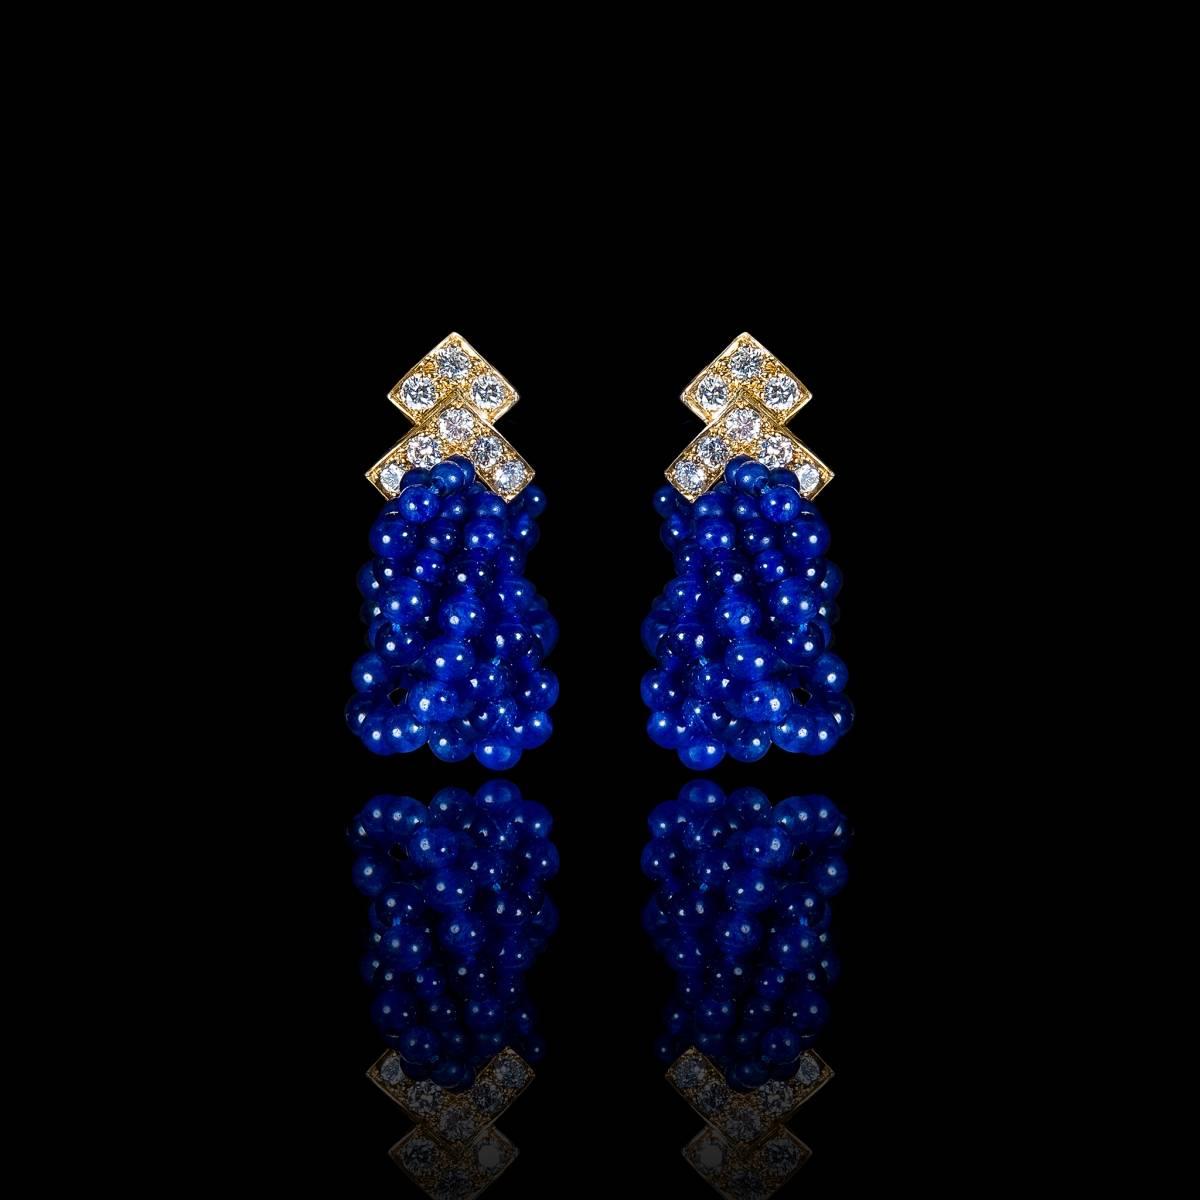 Van Cleef & Arpels earrings  in eighteen carats gold, diamonds and sodalites.
-DIAMONDS:8 brillants'cut diamonds
-SODALITES
-GOLD:18 carats gold
-SIGNED:V-C-A
-NUMBERED:B 3175
-EARPIERCE CLIP FITINGS
